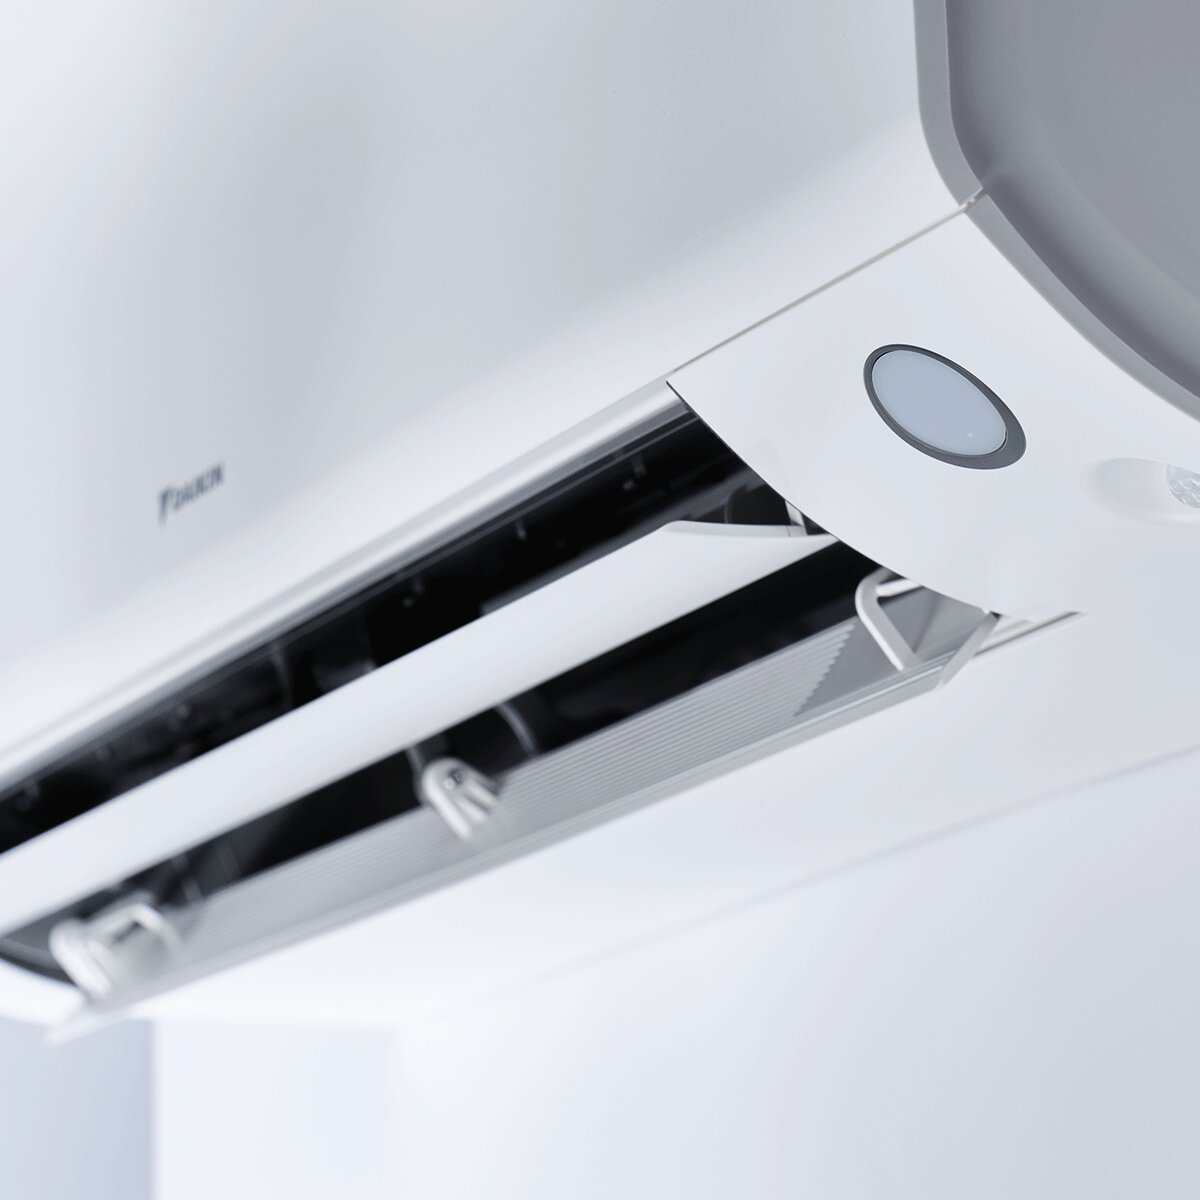 Daikin Perfera All Seasons Air Conditioner 12000 BTU R32 Inverter A+++ WiFi